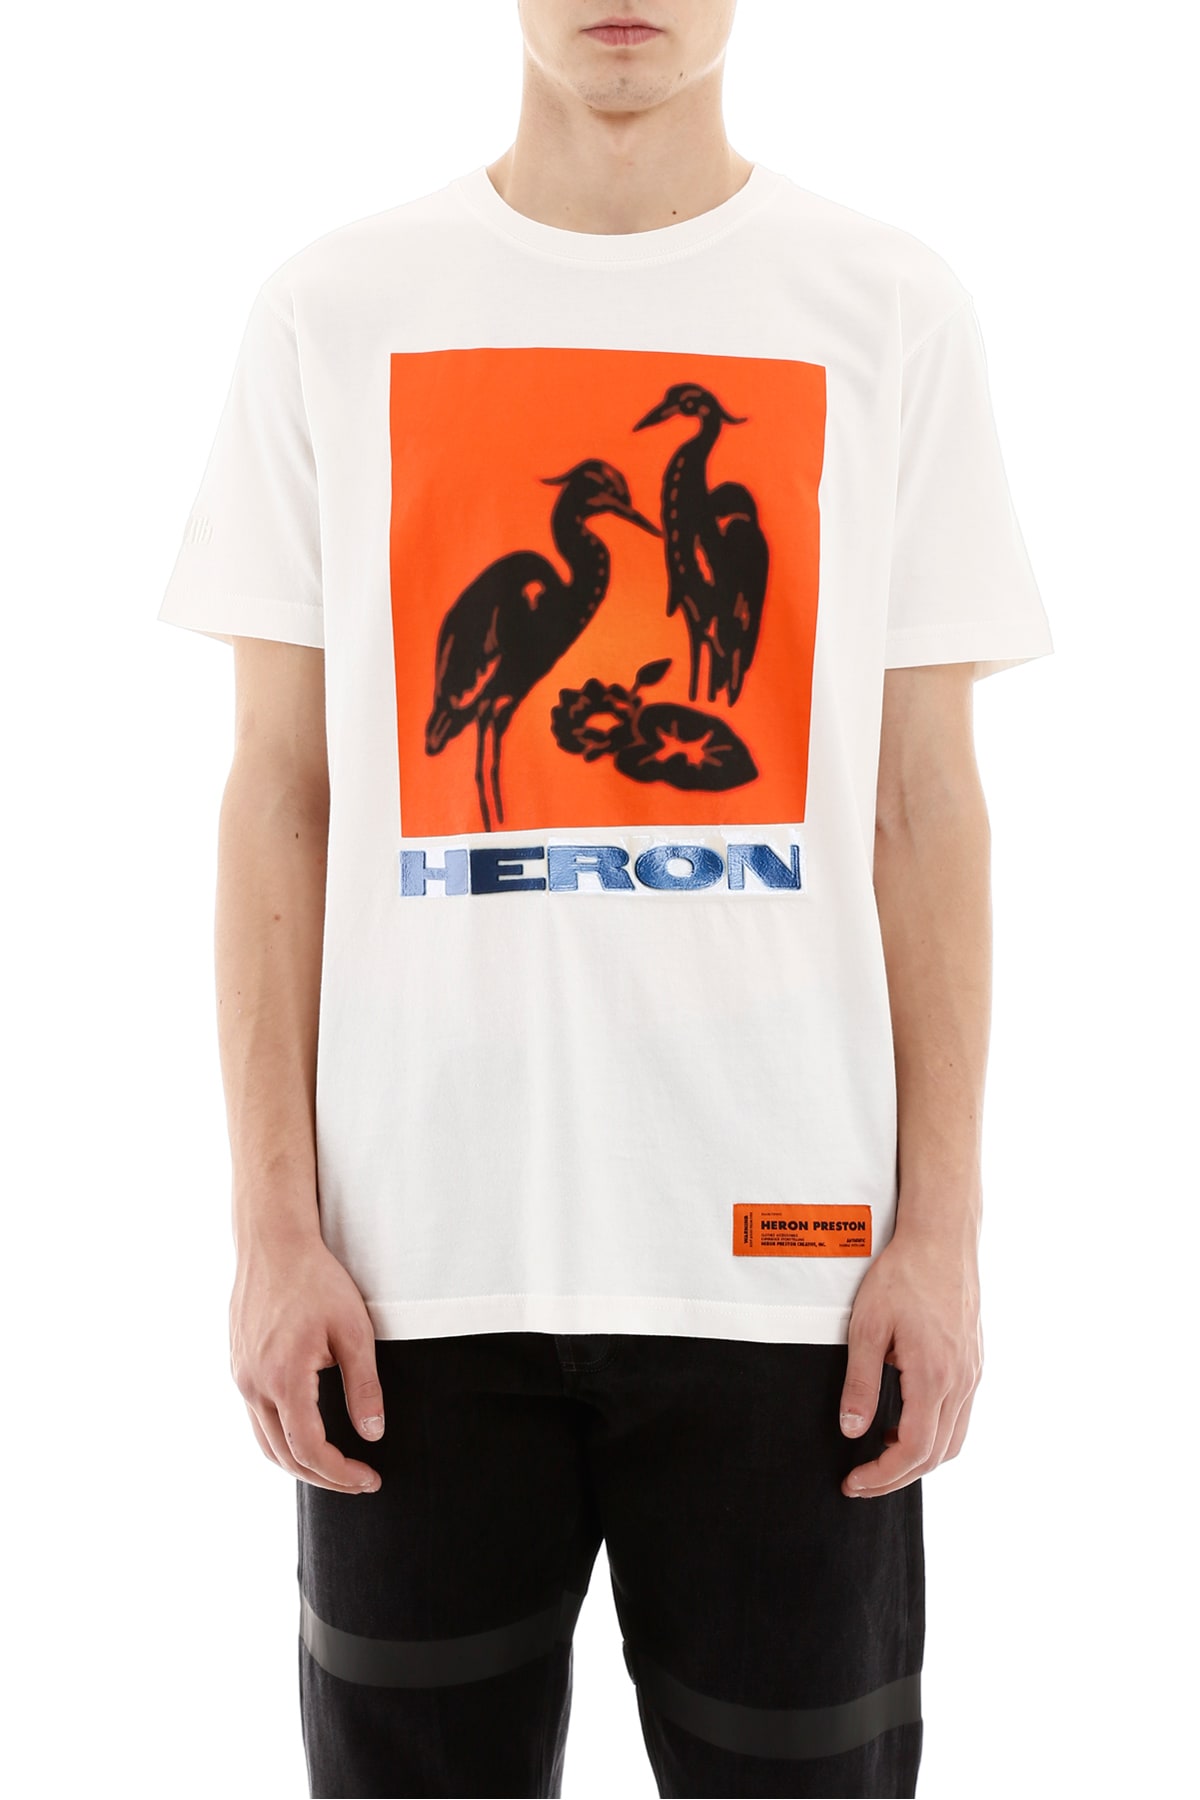 HERON PRESTON HERON PRESTON Printed T-shirt - OFF WHITE MULTICOLOR ...